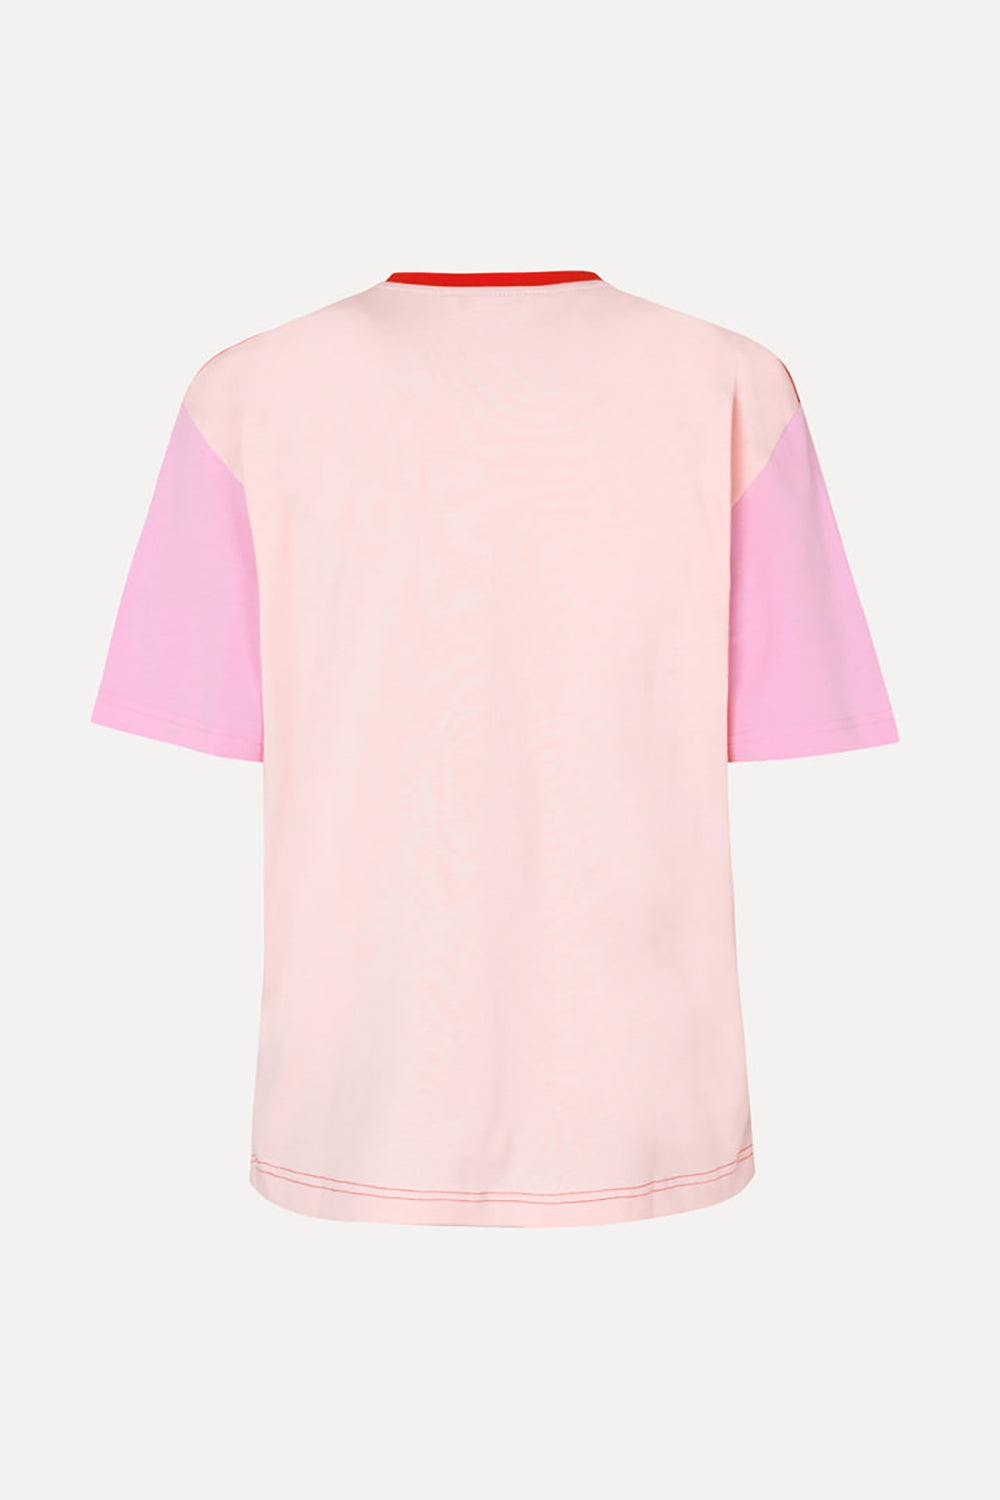 Womens Shirt | Stine Goya Margila t-Shirt | The Standard StoreWomens Shirt | Stine Goya Margila t-Shirt | The Standard Store